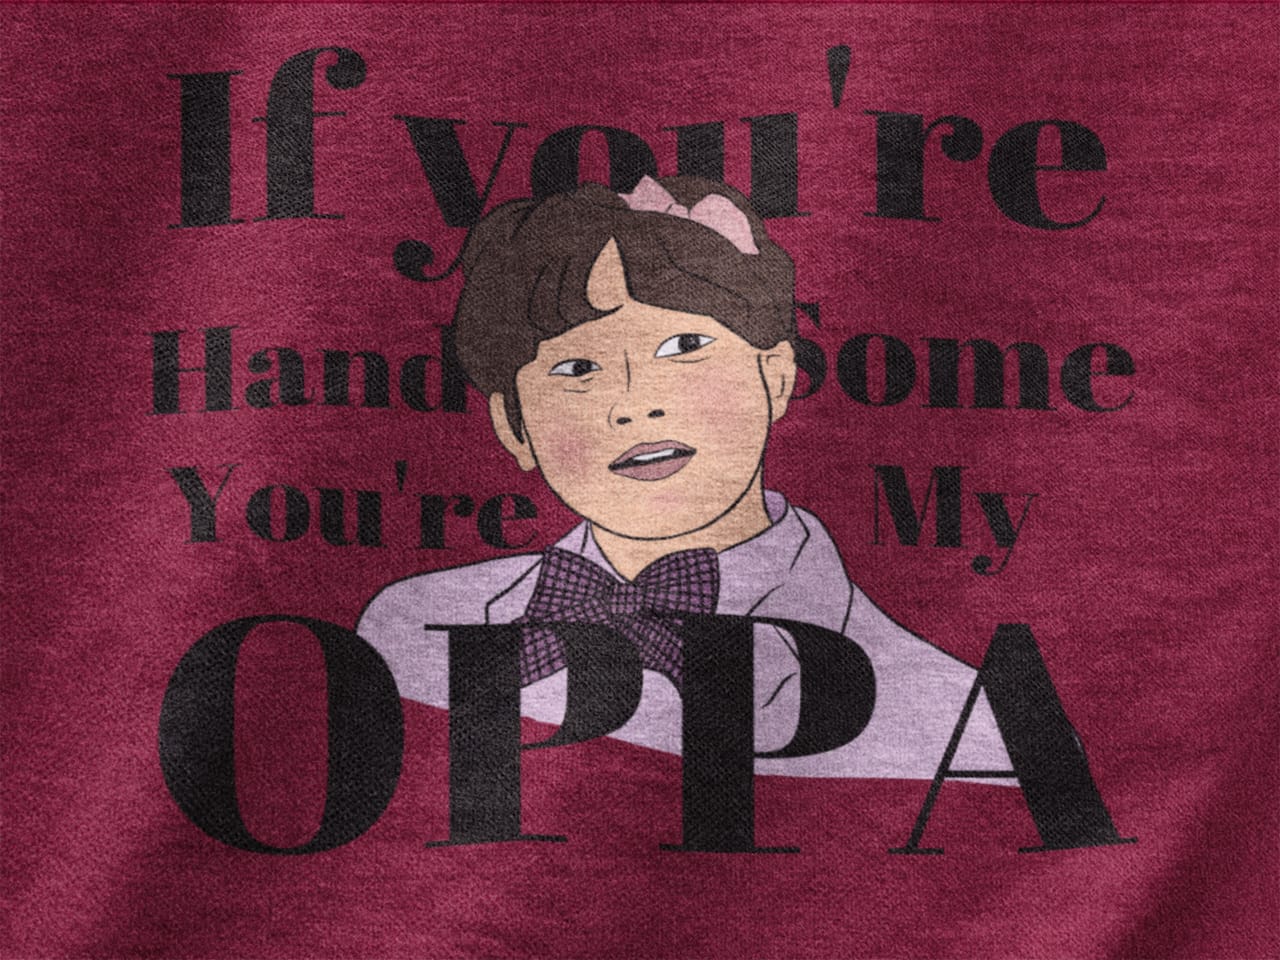 You are my Oppa | Premium Half Sleeve Unisex T-Shirt